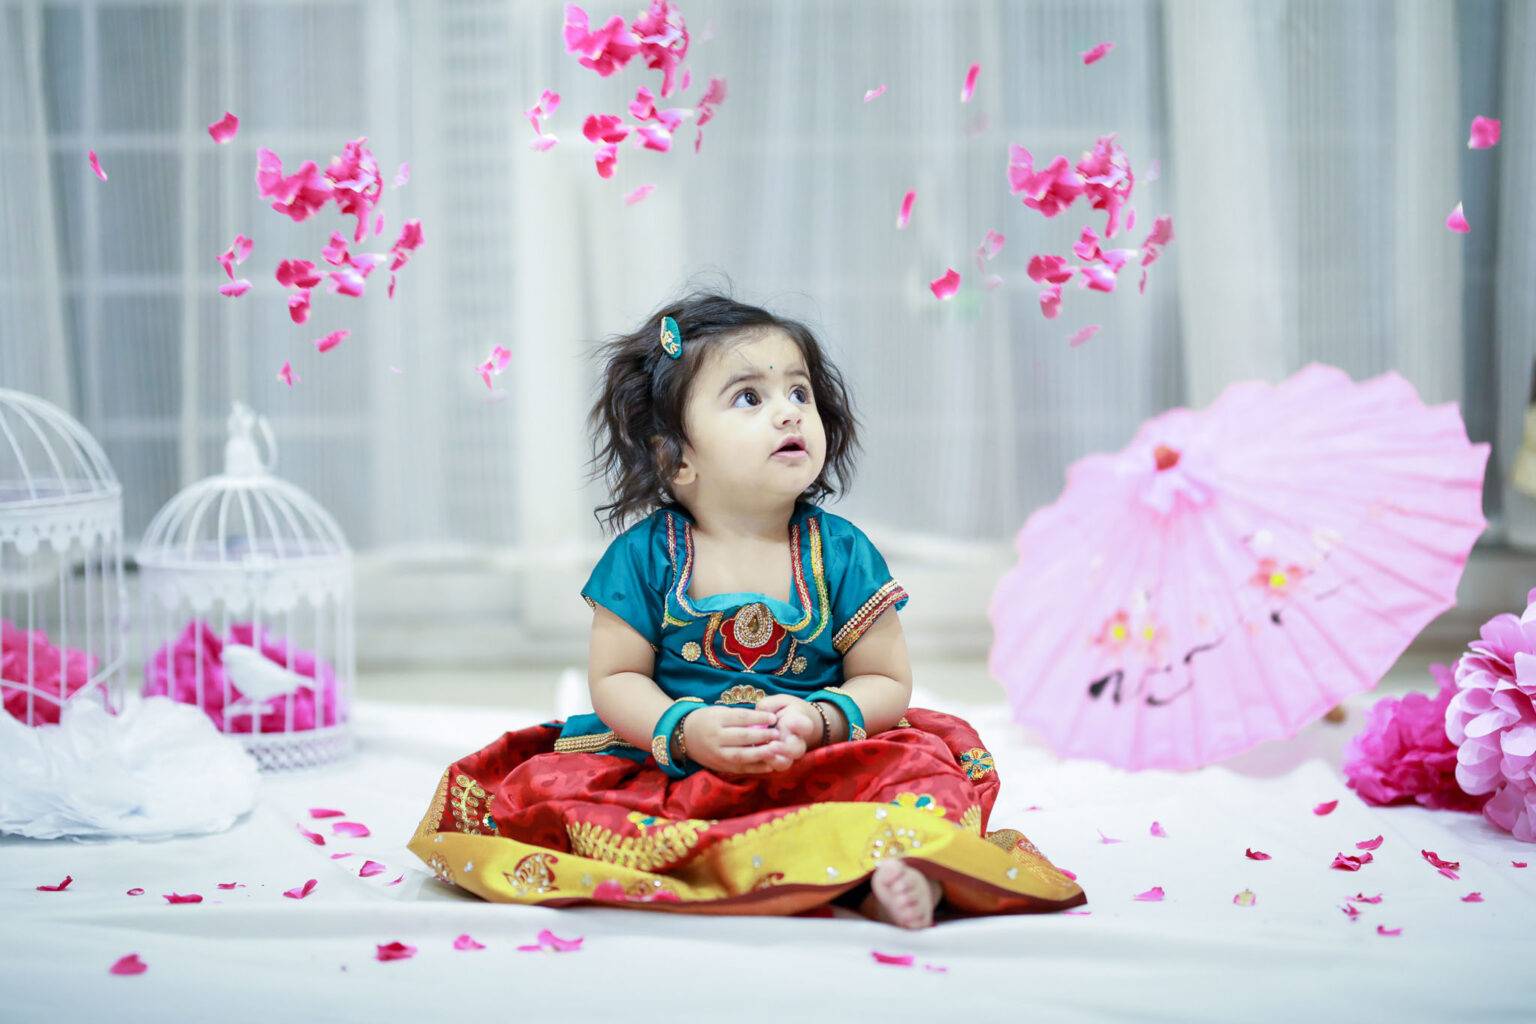 Adorable Baby Girl St Birthday Photoshoot Ideas